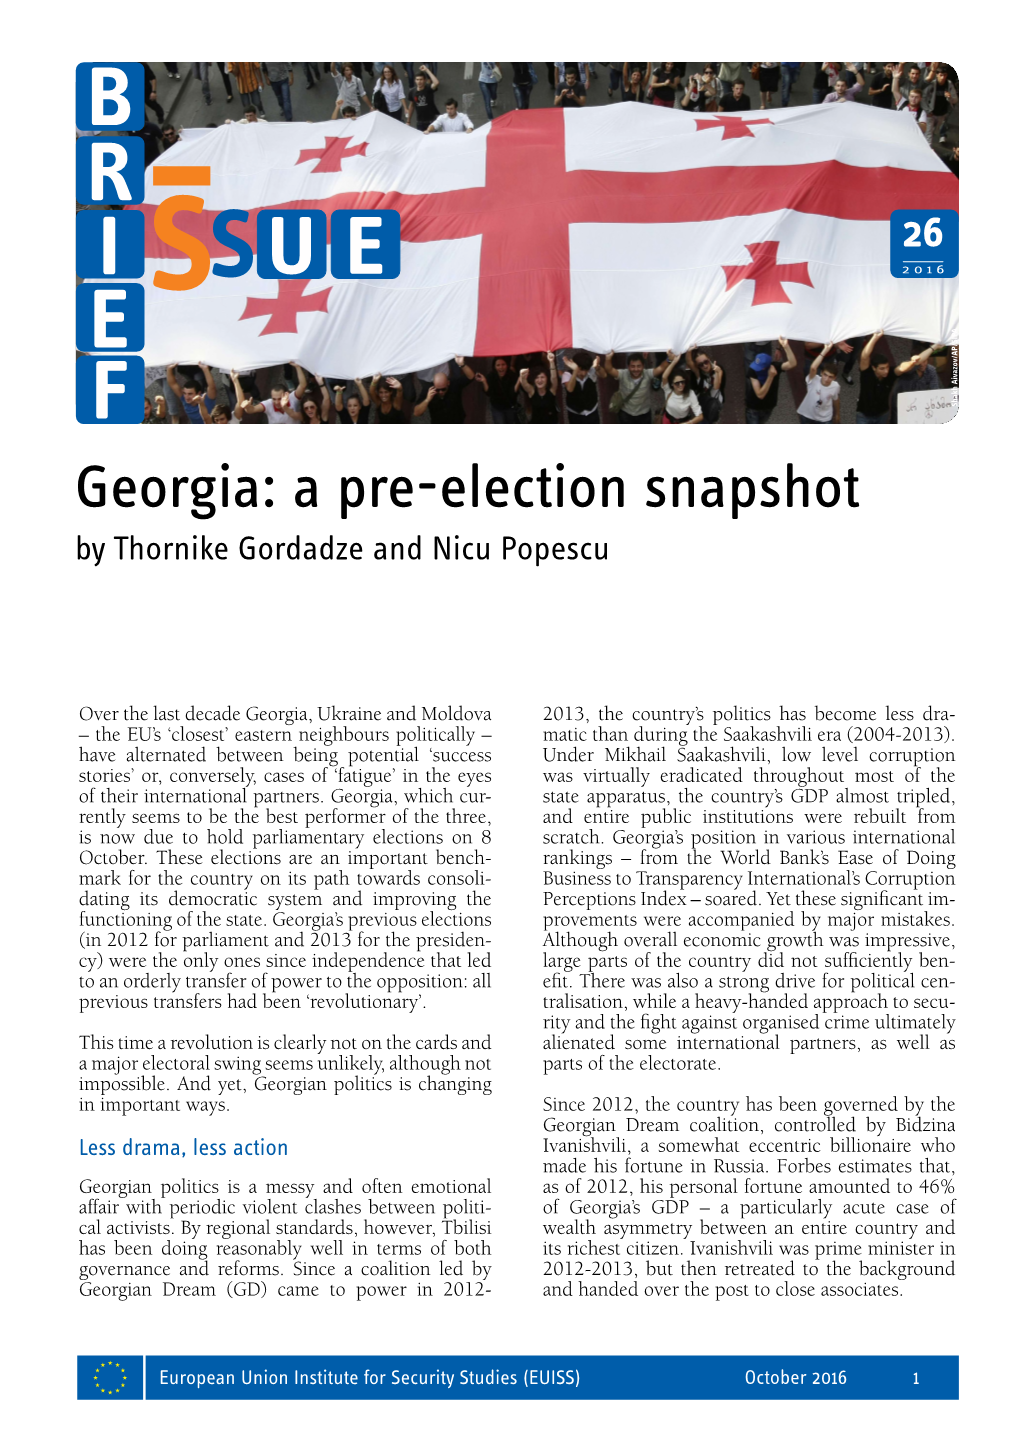 Georgia: a Pre-Election Snapshot by Thornike Gordadze and Nicu Popescu